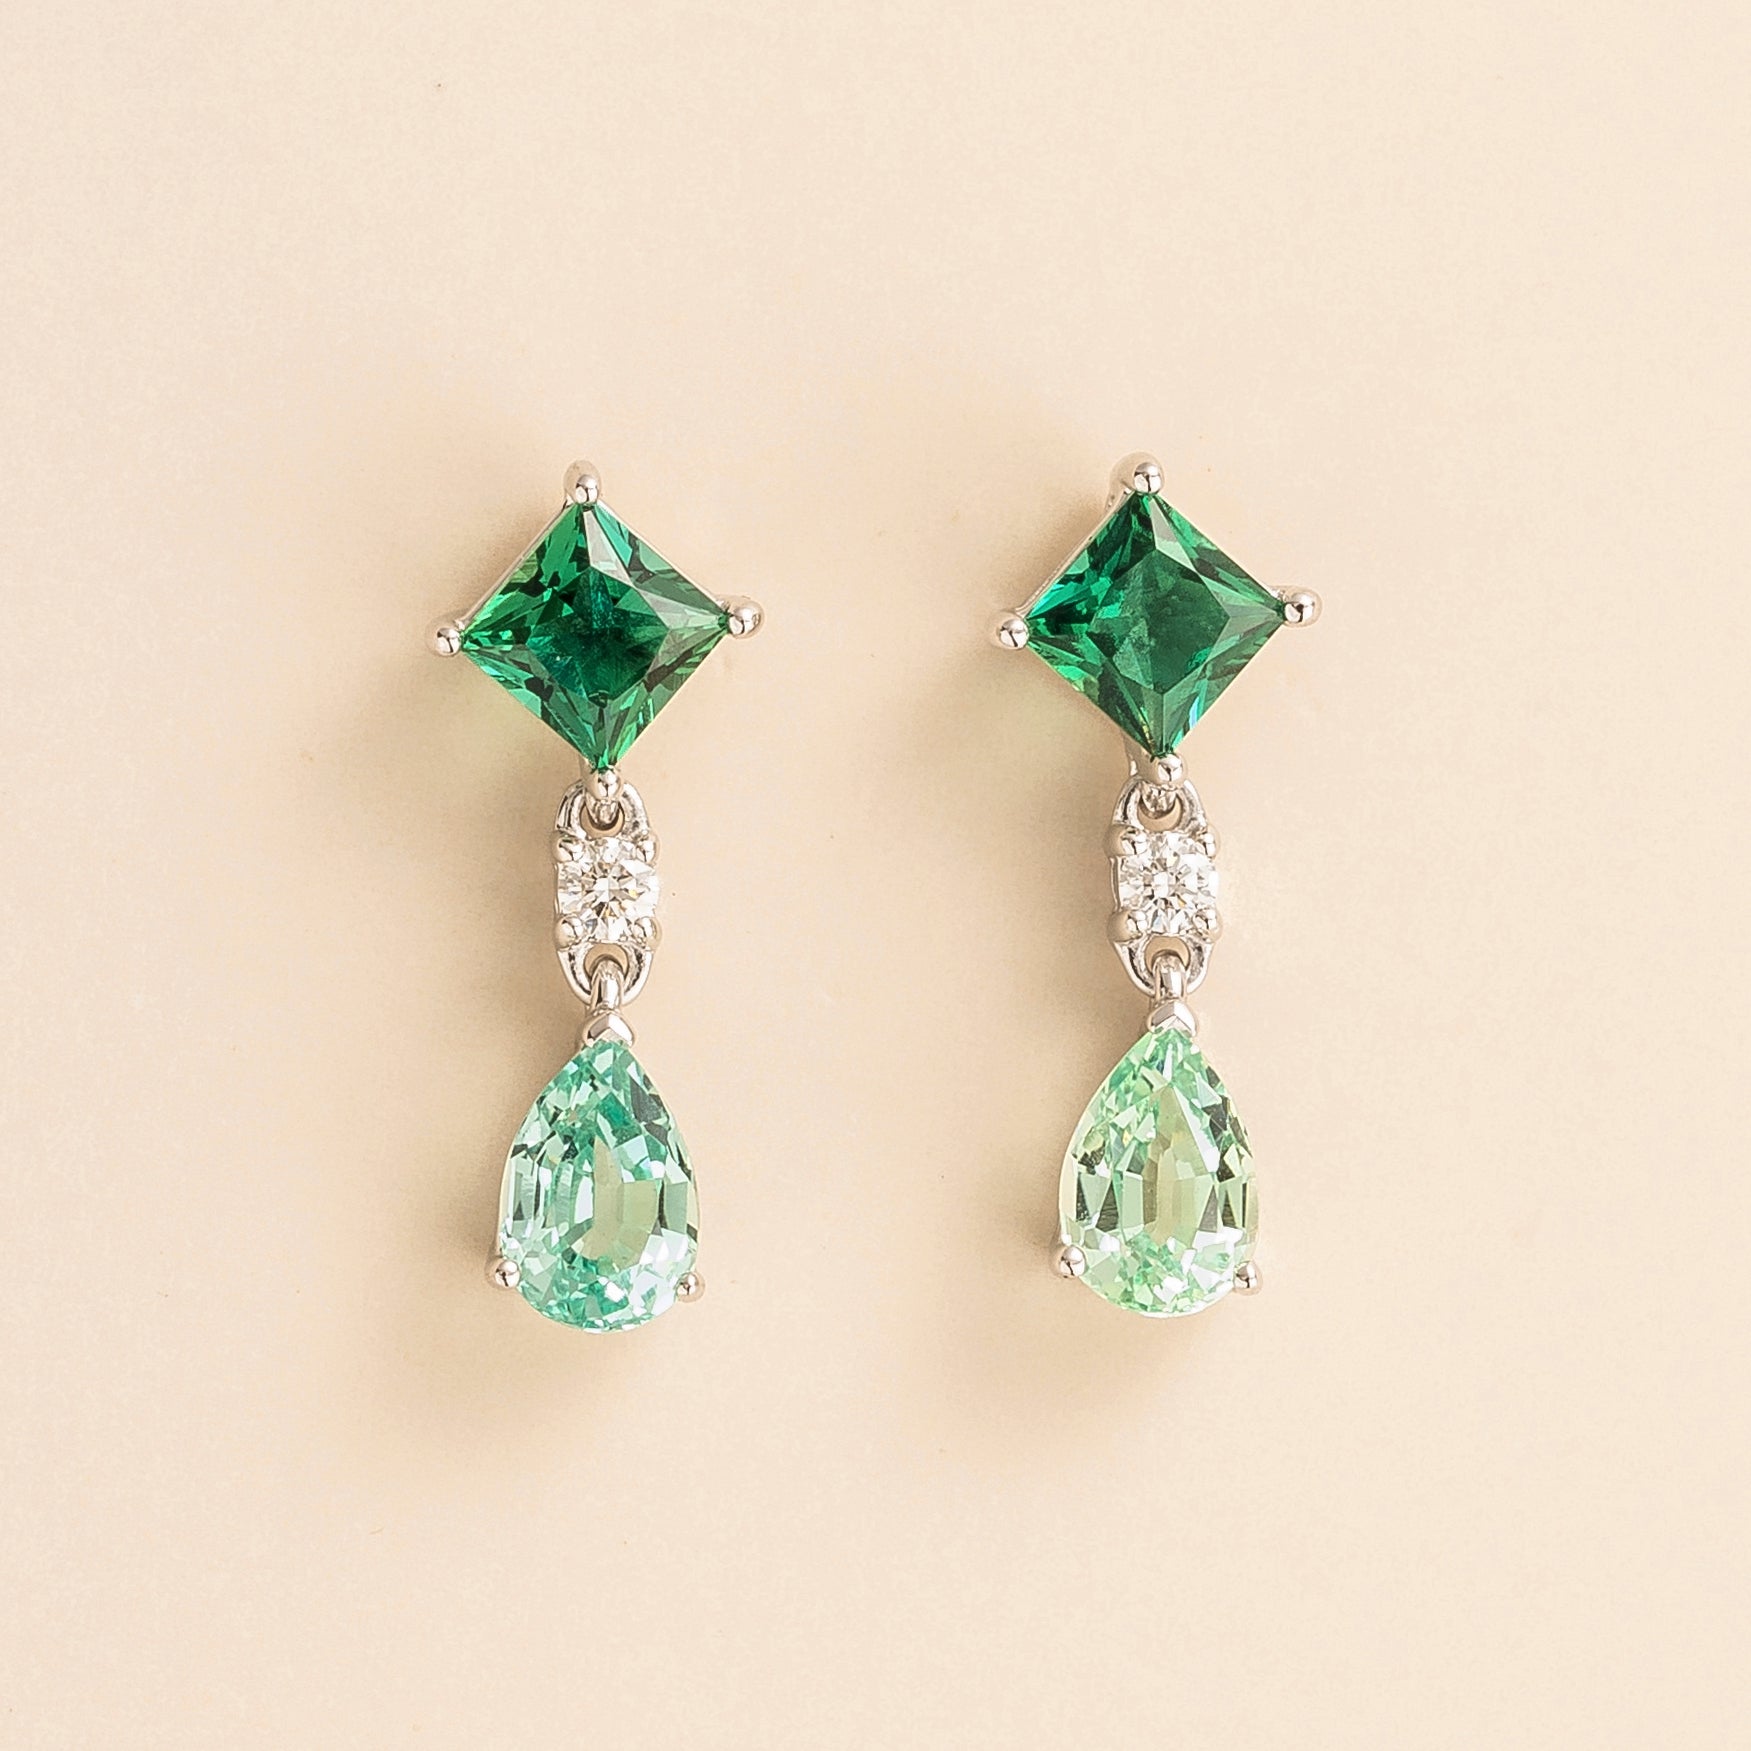 Ori white gold earrings in Emerald Diamond and Green sapphire By Bespoke Jewellery London